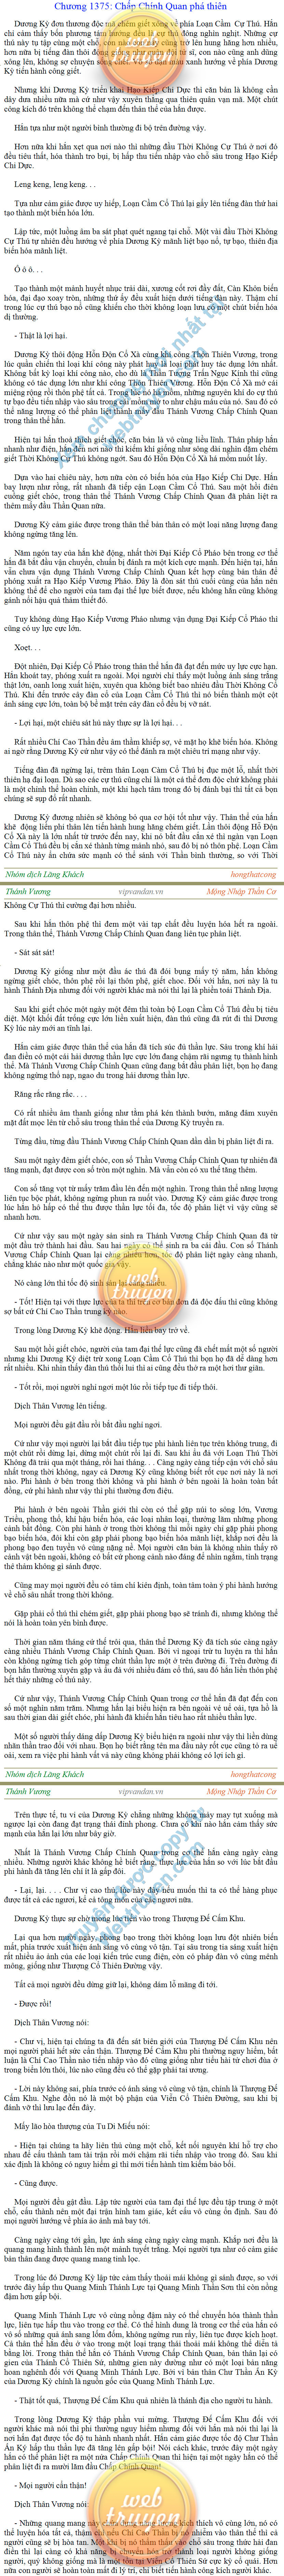 Thanh-vuong-1375.png